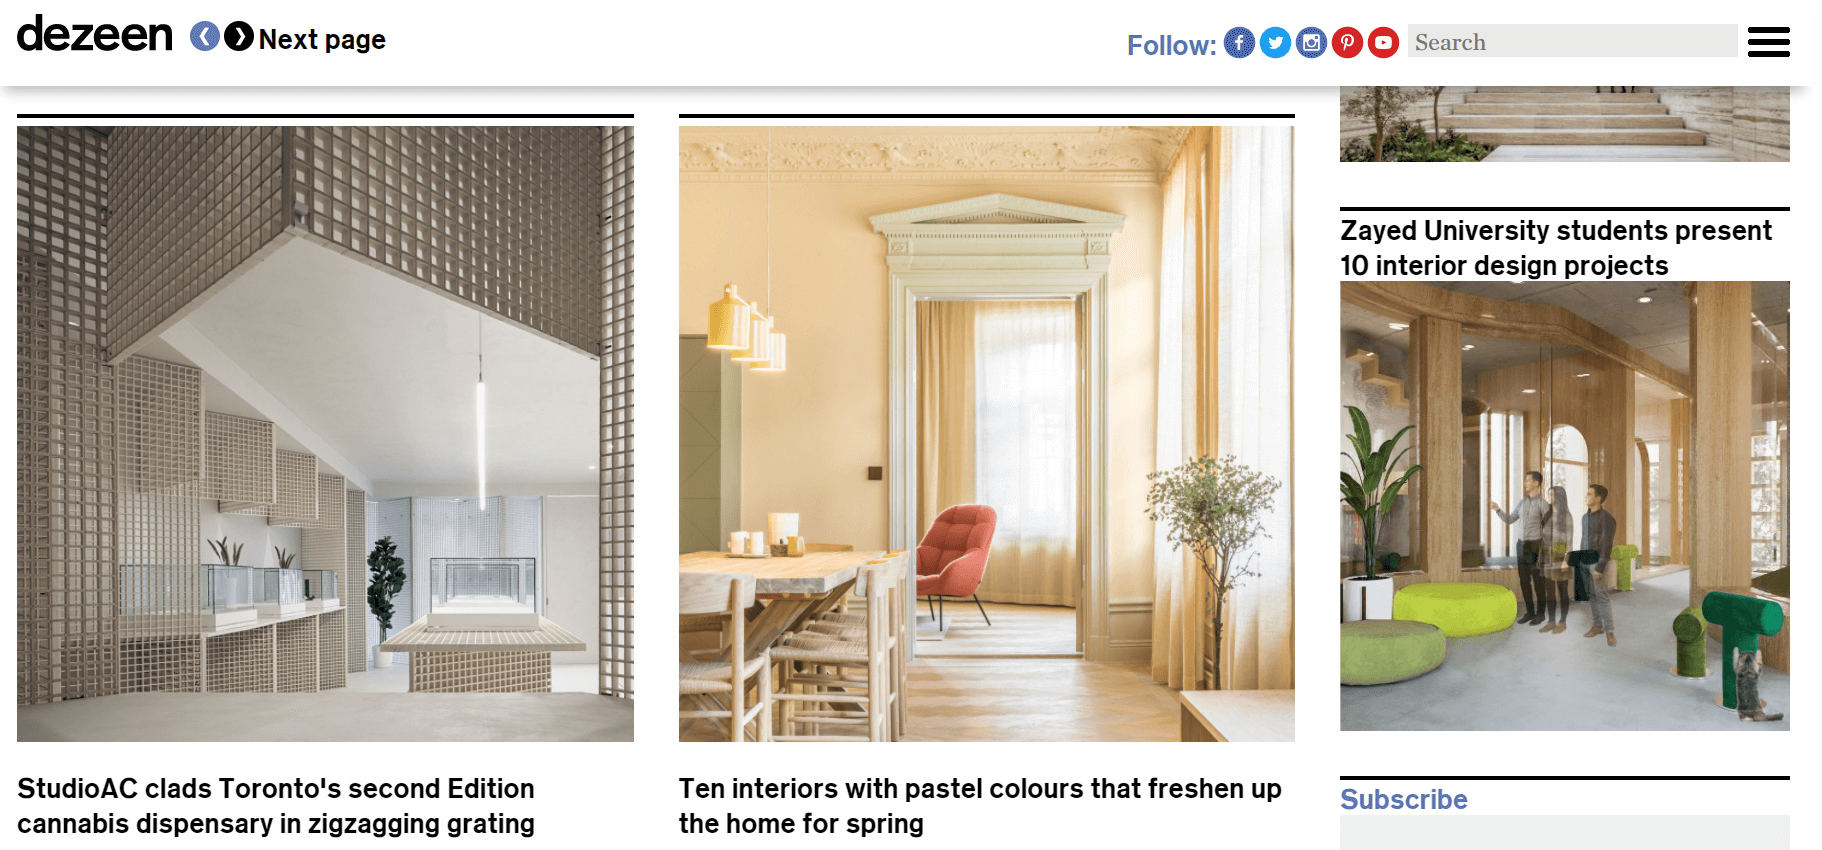 Best interior design magazines: 5 editions of ELLE Décoration